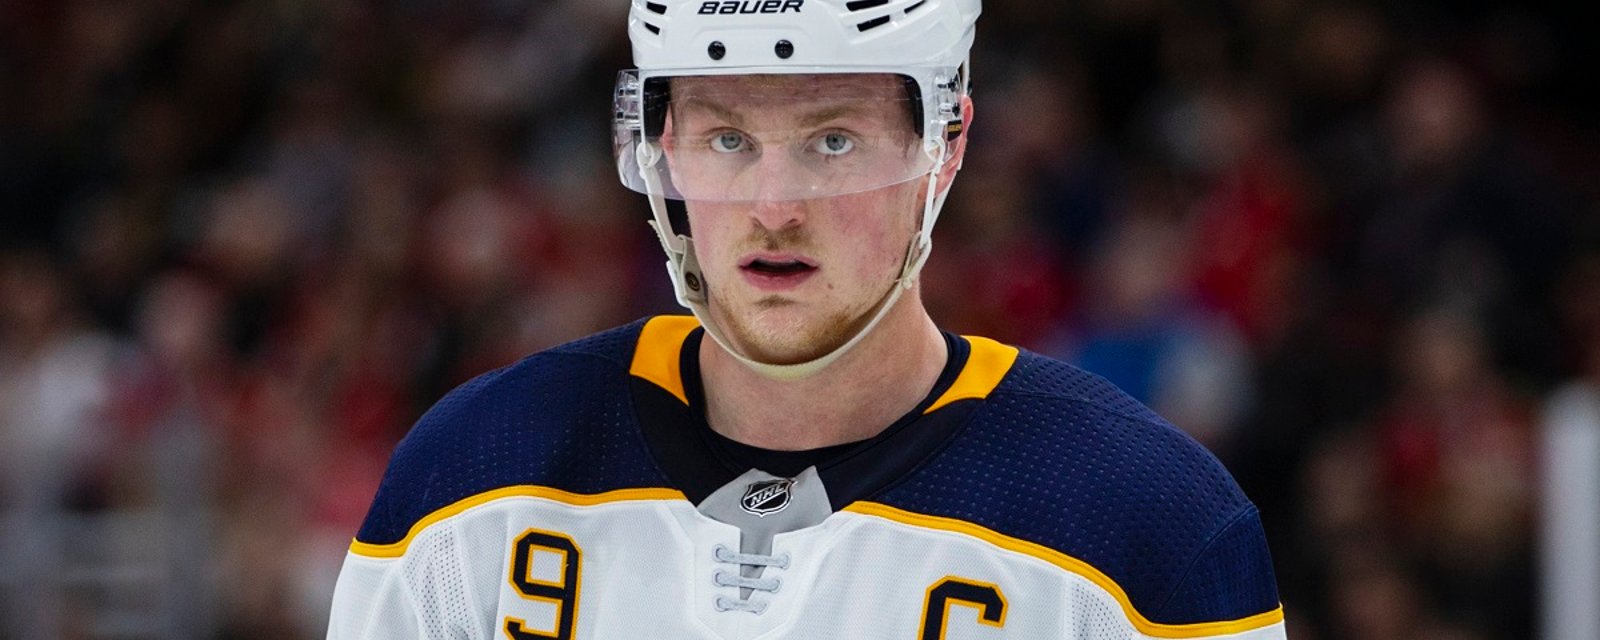 Insider proposes blockbuster trade between the Bruins and Sabres for Jack Eichel.